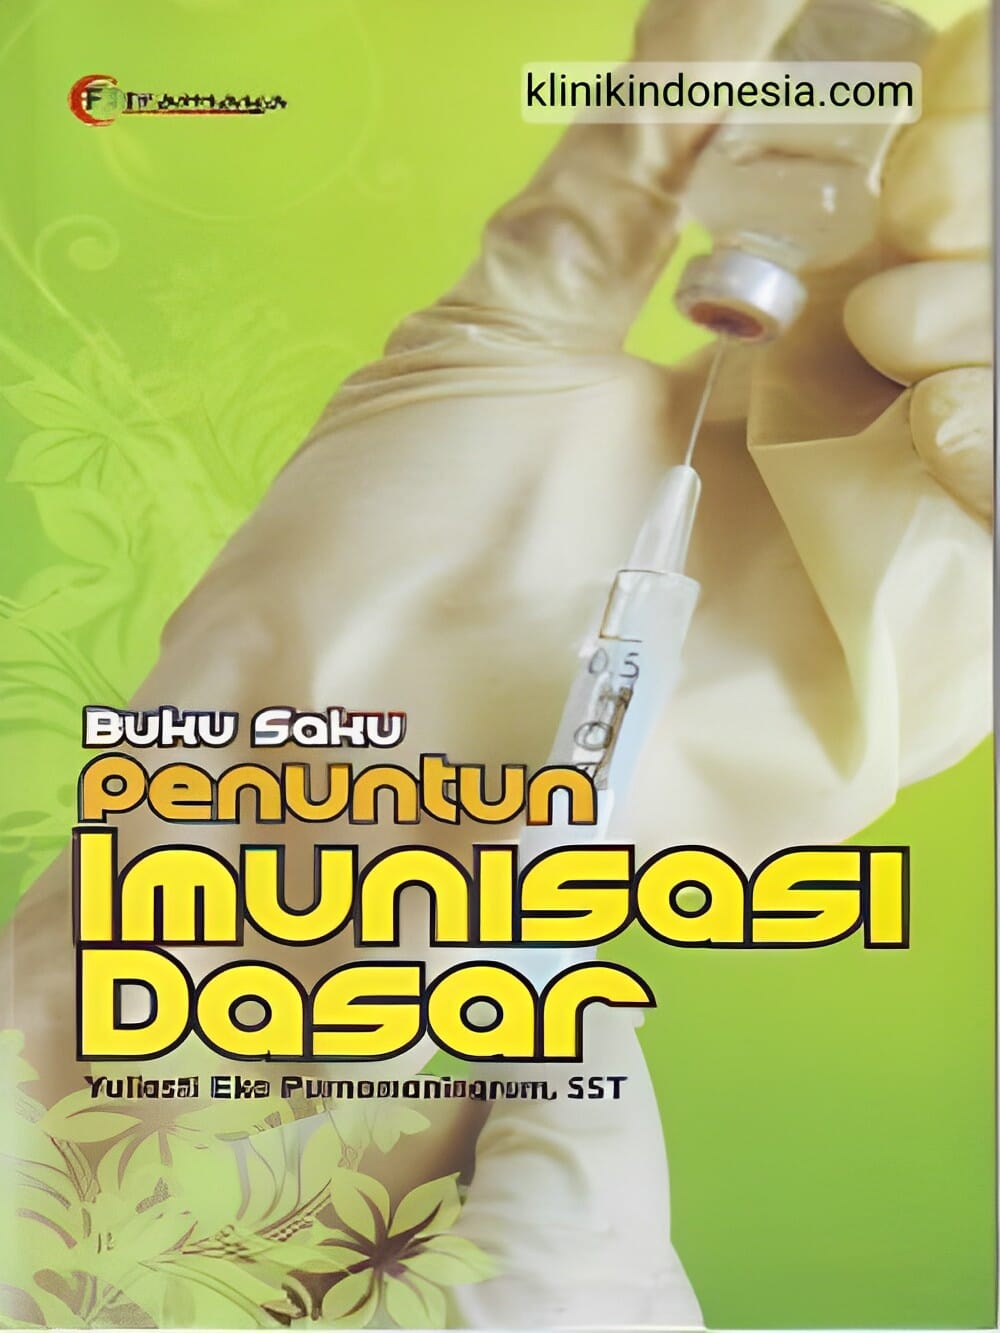 Gambar Buku Saku Penuntun Imunisasi Dasar